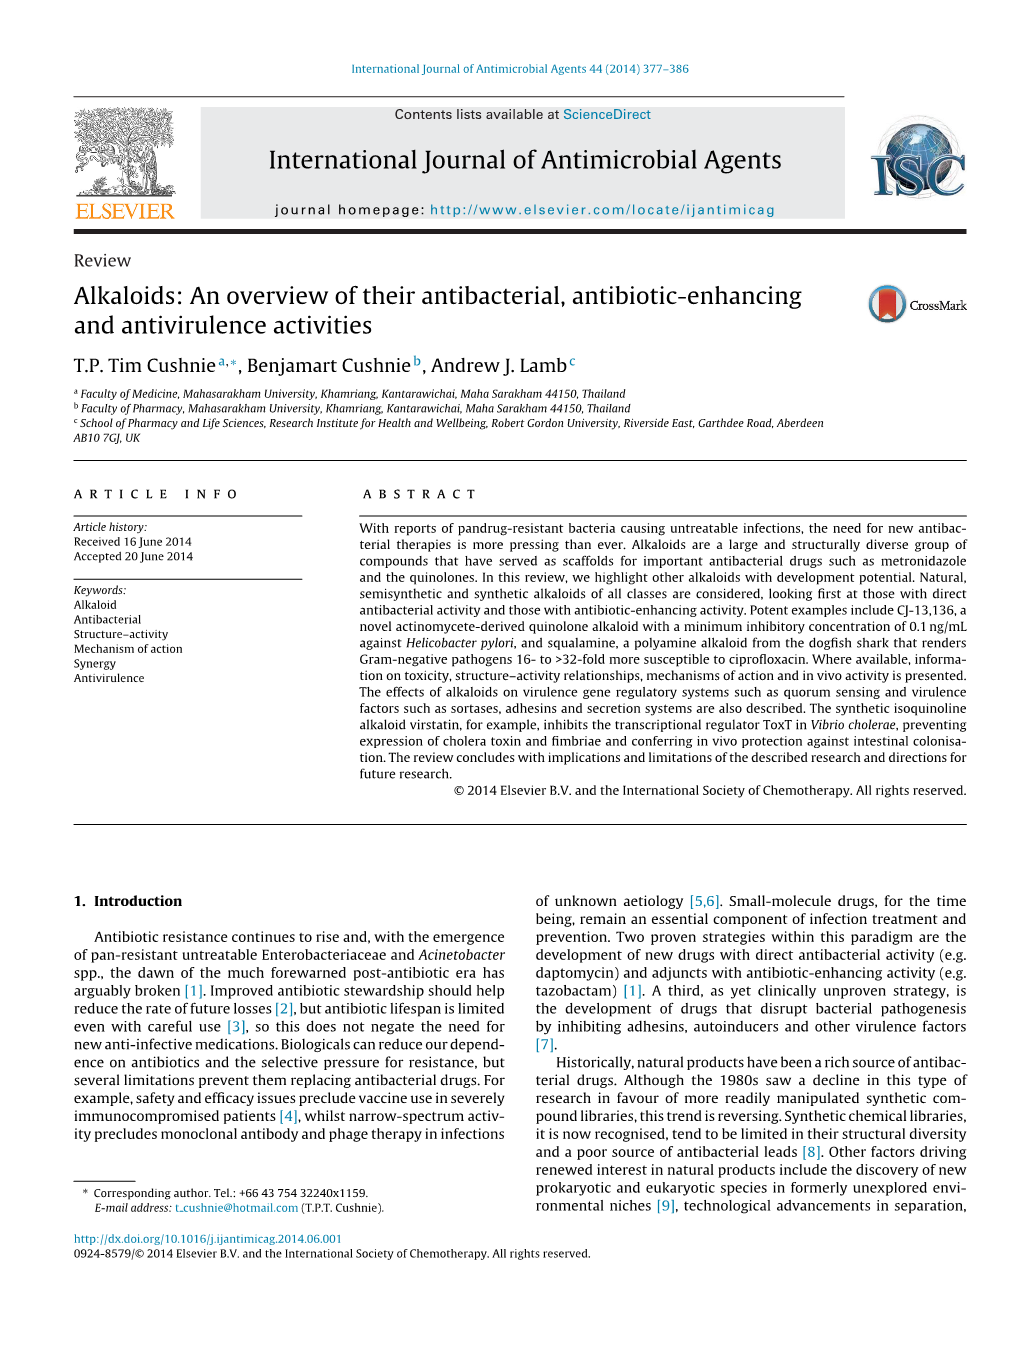 Alkaloids: an Overview of Their Antibacterial, Antibiotic-Enhancing and Antivirulence Activities